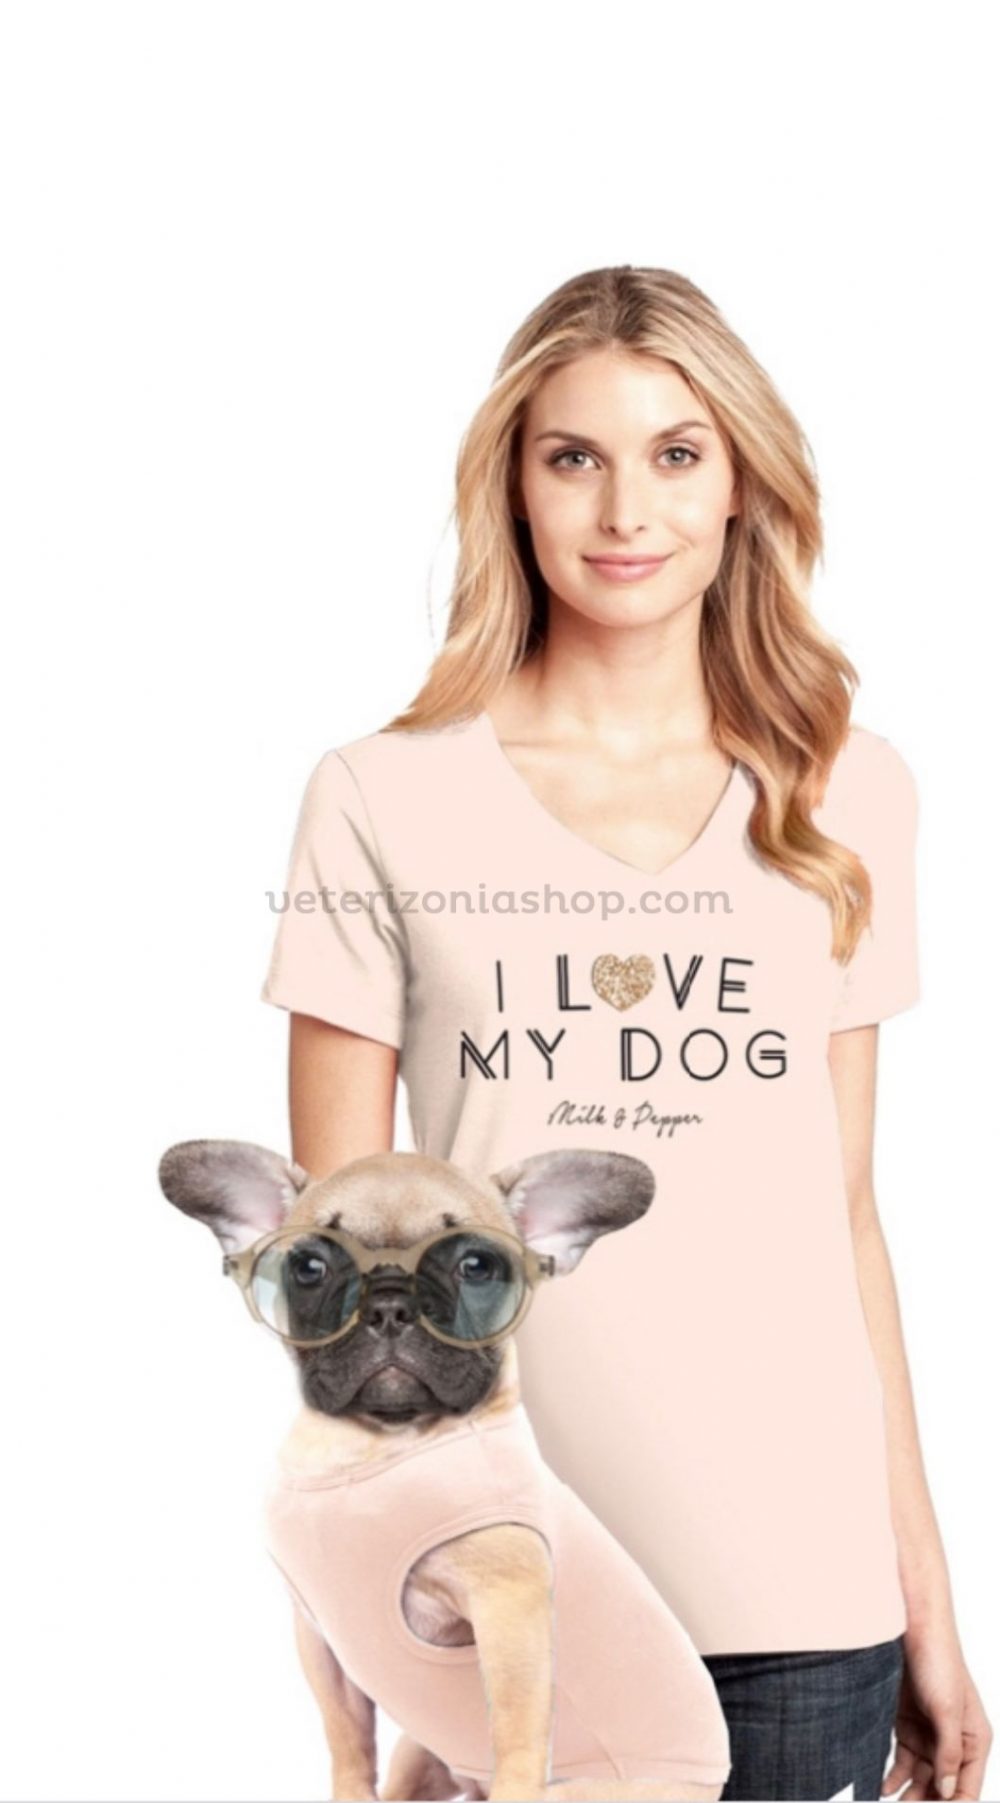 Camiseta para Humano "I Love my Dog" Milk&pepper